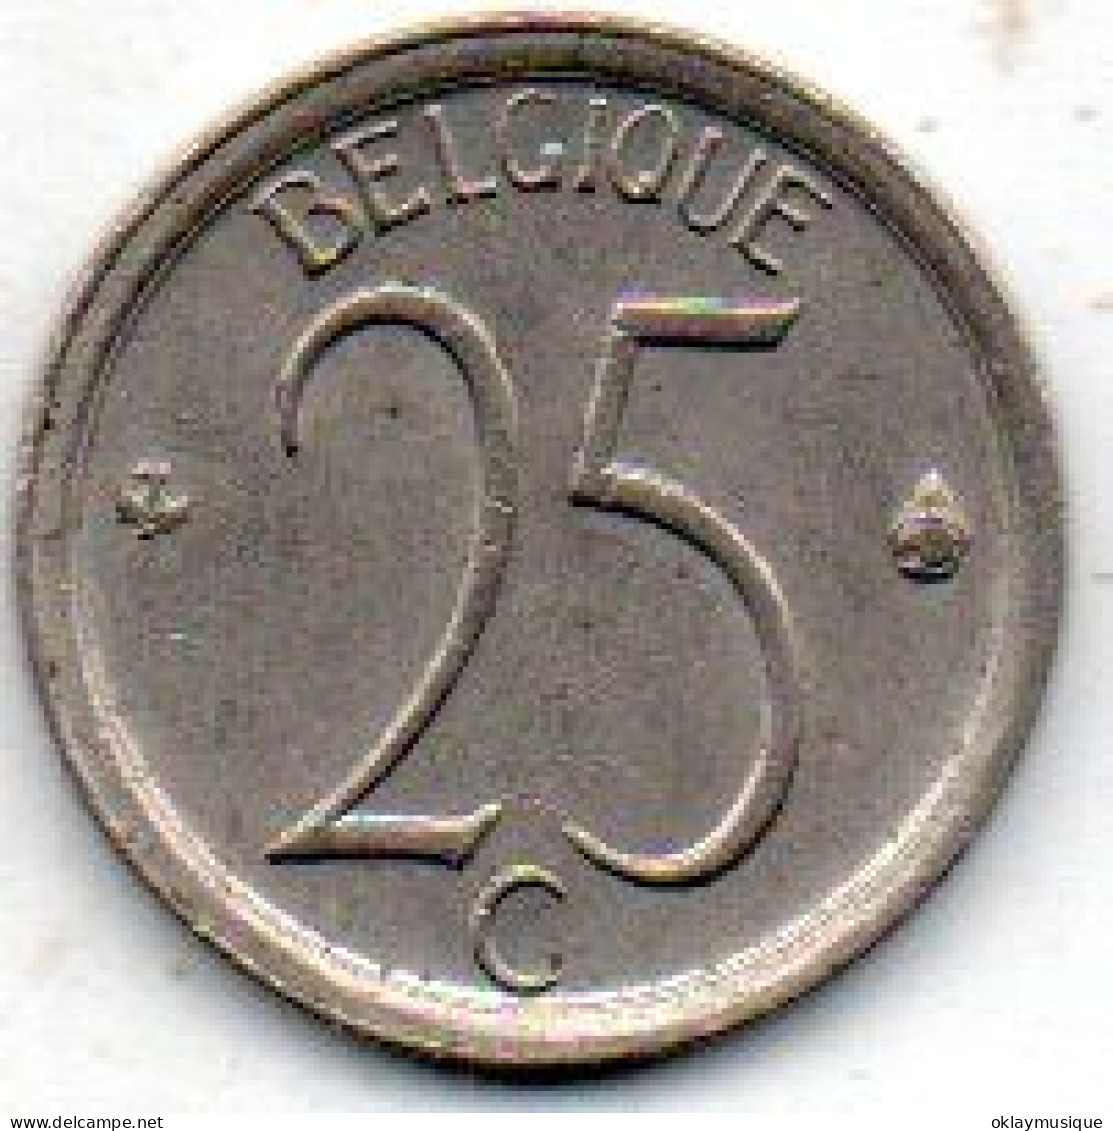 25 Centimes 1969 - 25 Centimes